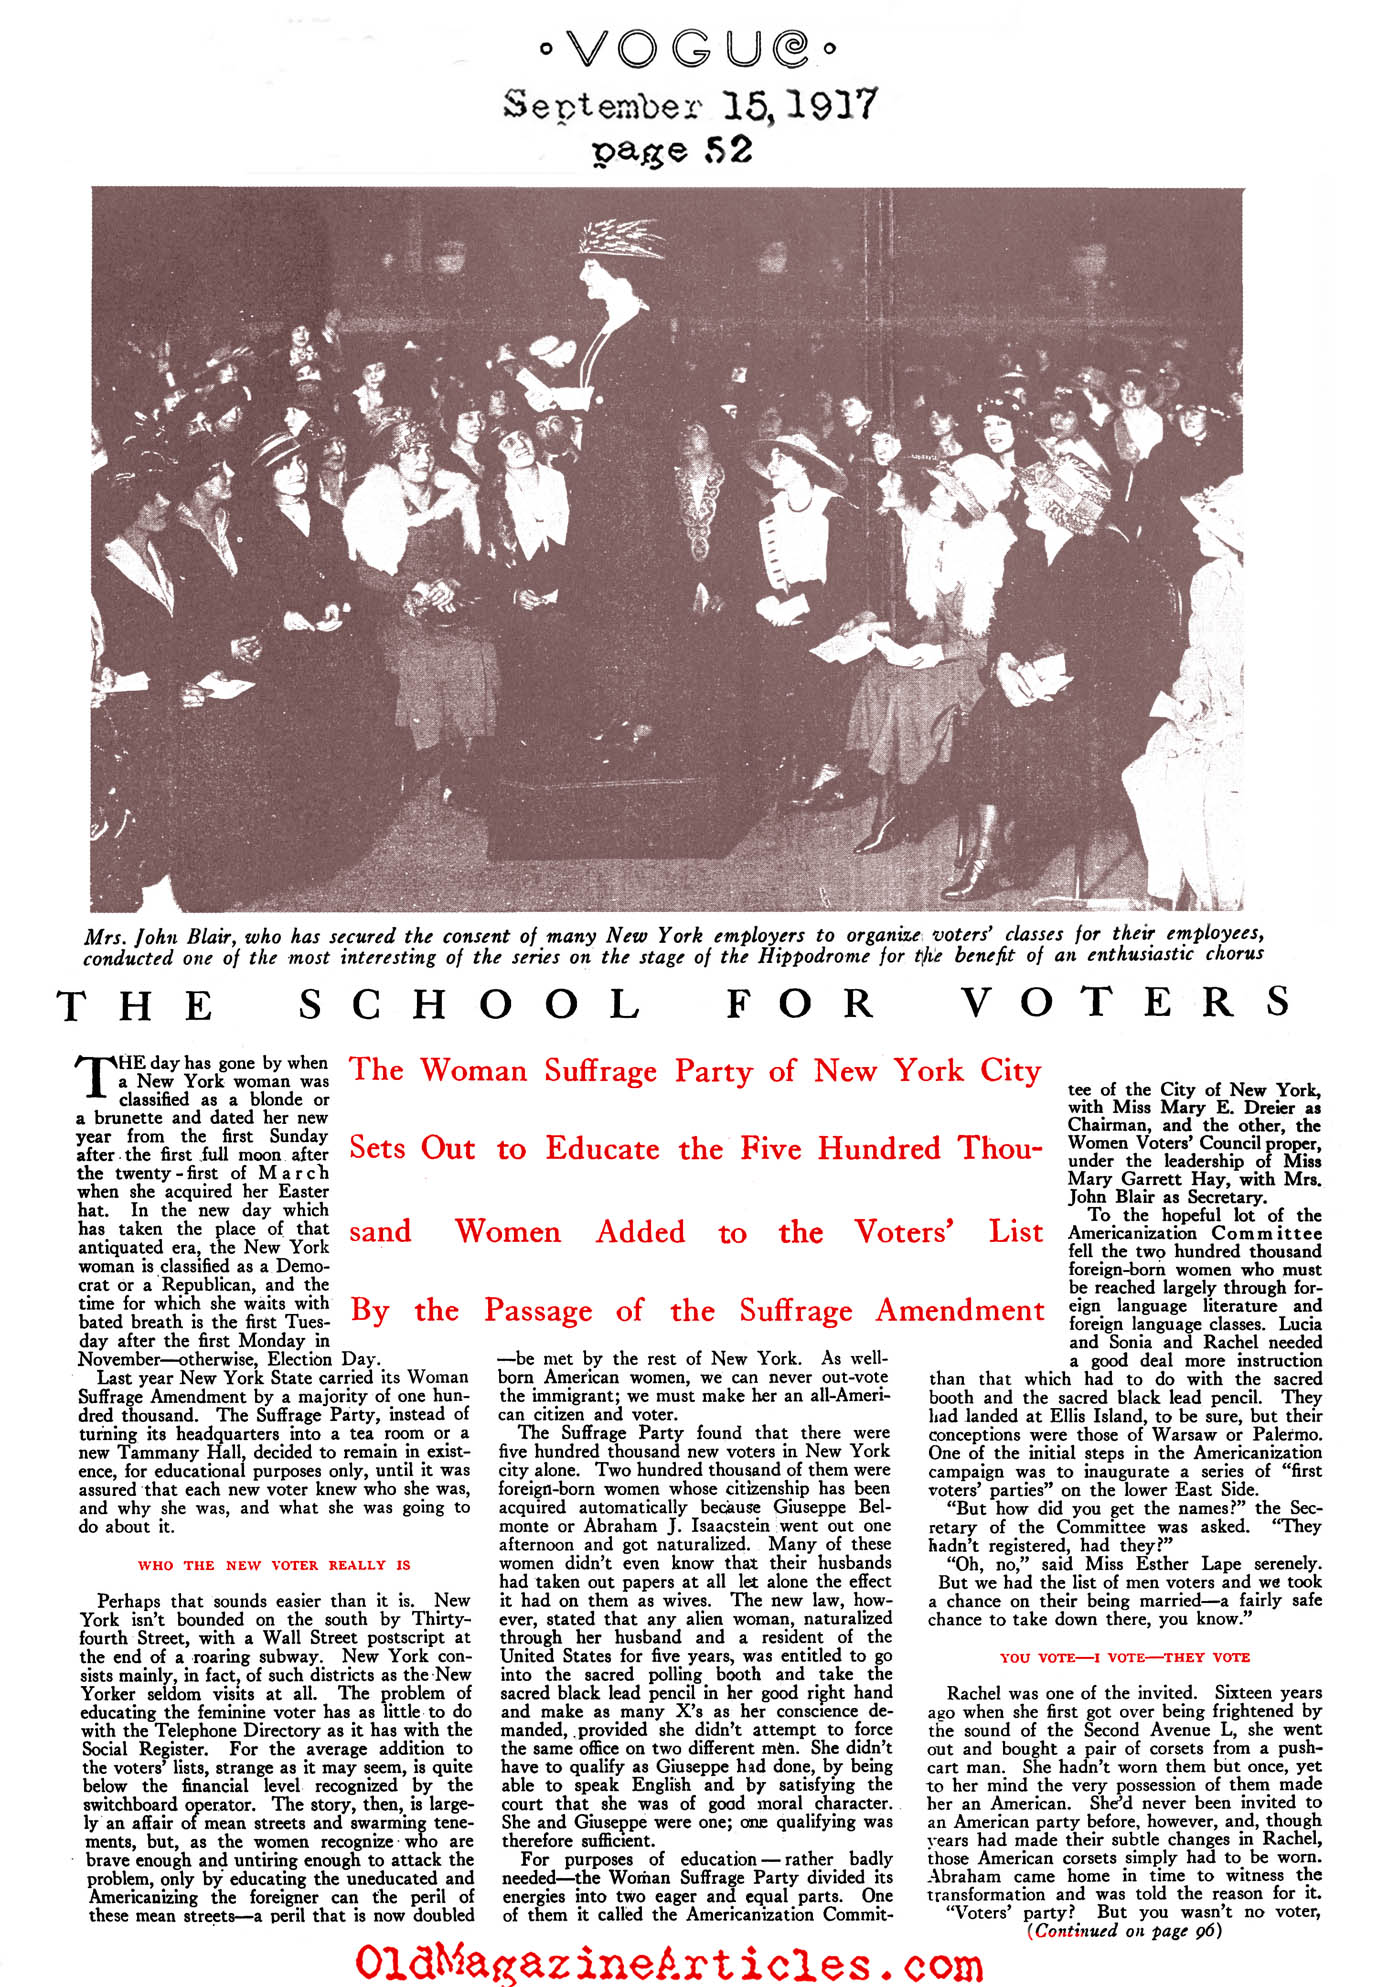 The New York Suffrage Amendment Advances the Ball (Vogue Magazine, 1917)